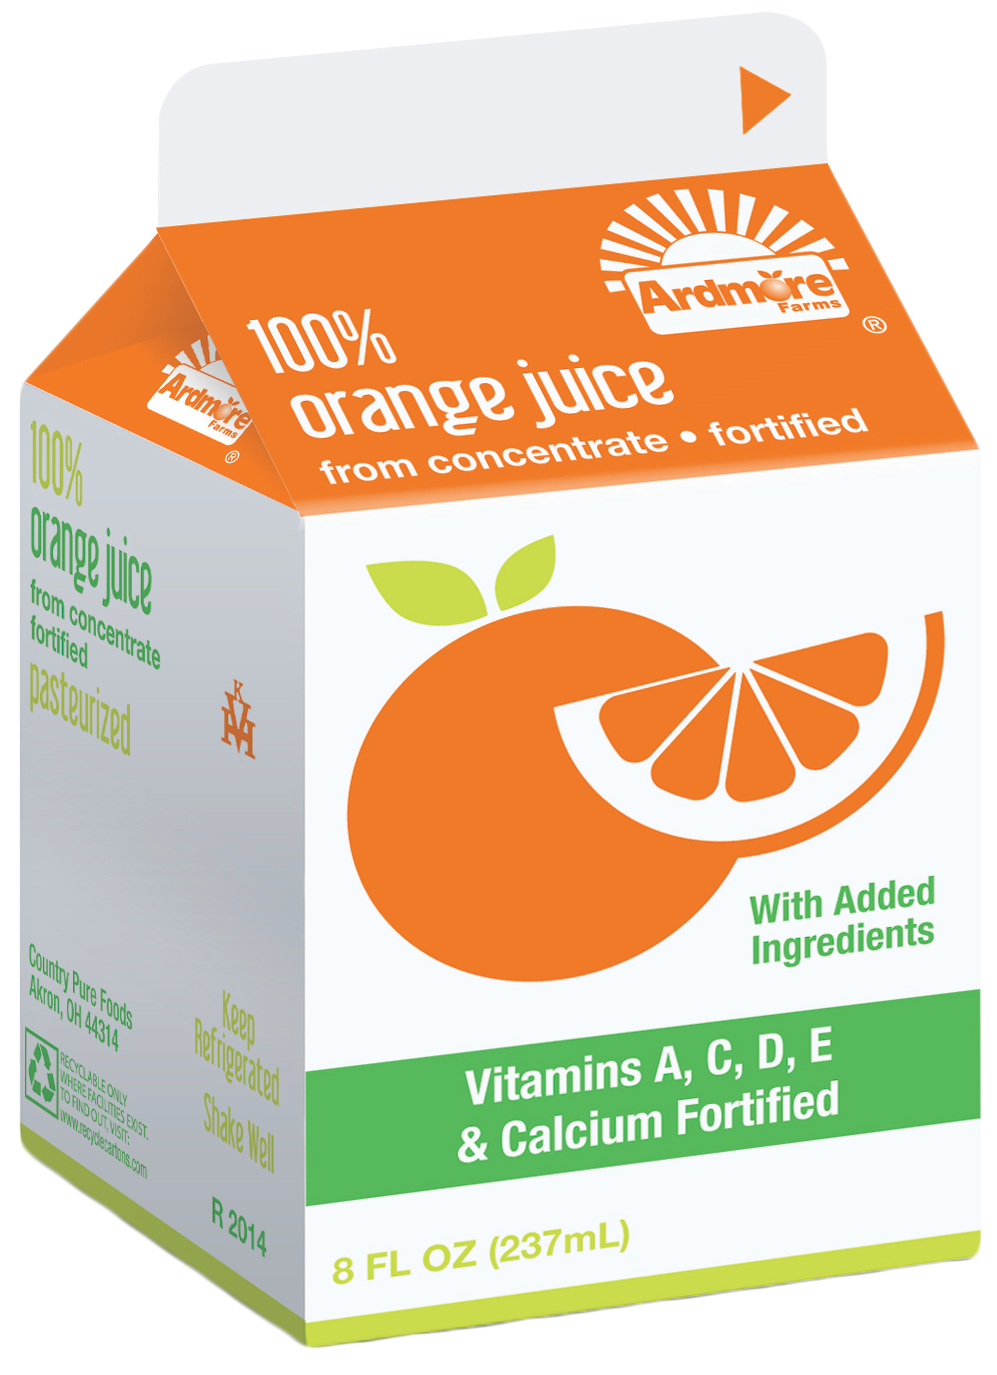 Whole Fruit Orange Premium Juice Cup, 4 Ounce - 96 per case.